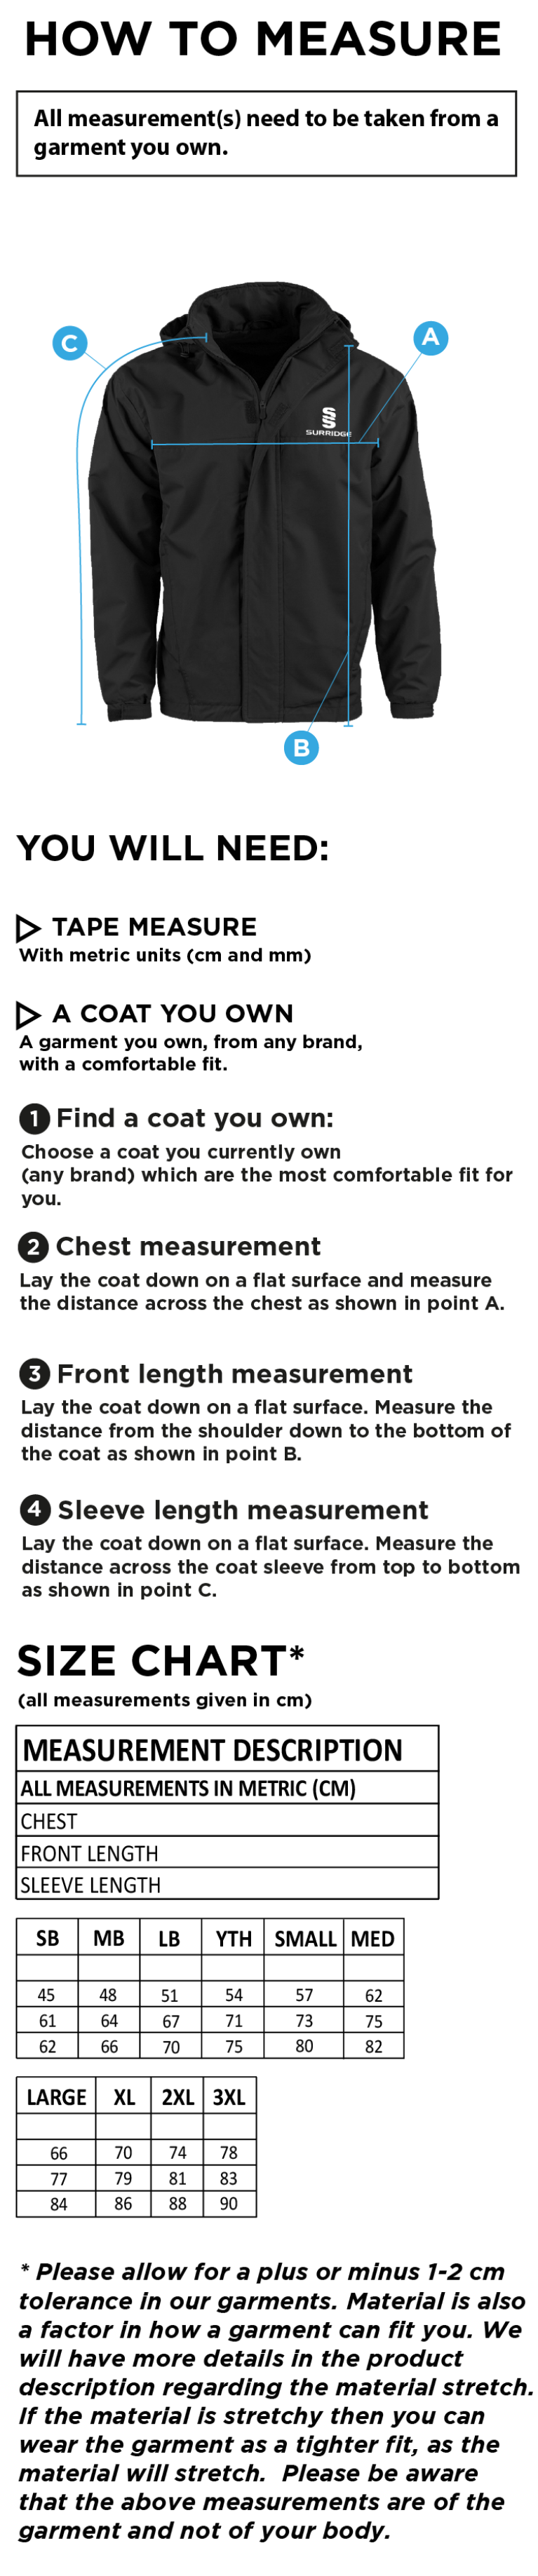 Dual Fleece Lined Jacket : Navy - Size Guide